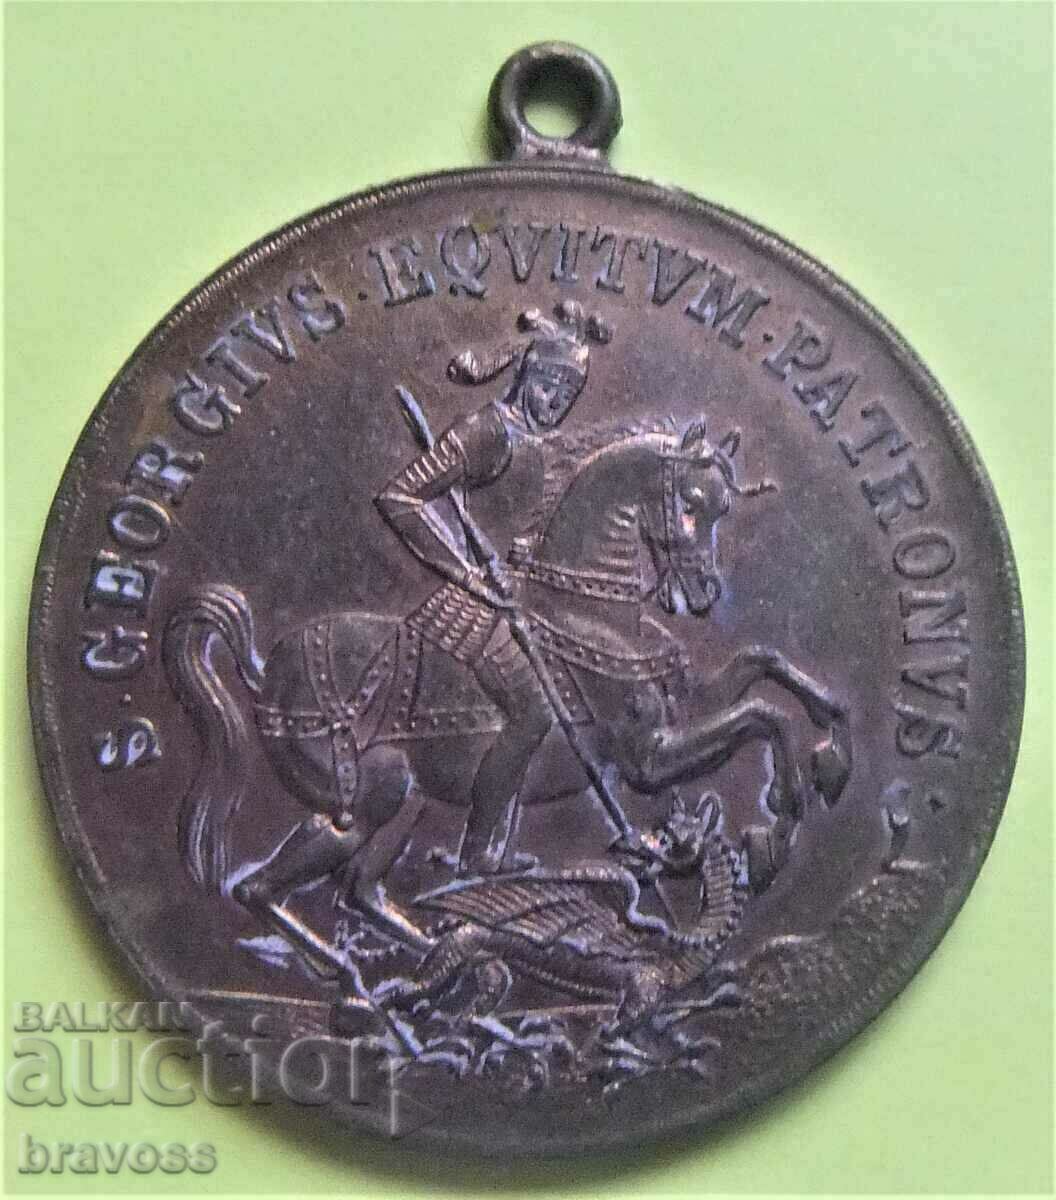 Medal - St. George